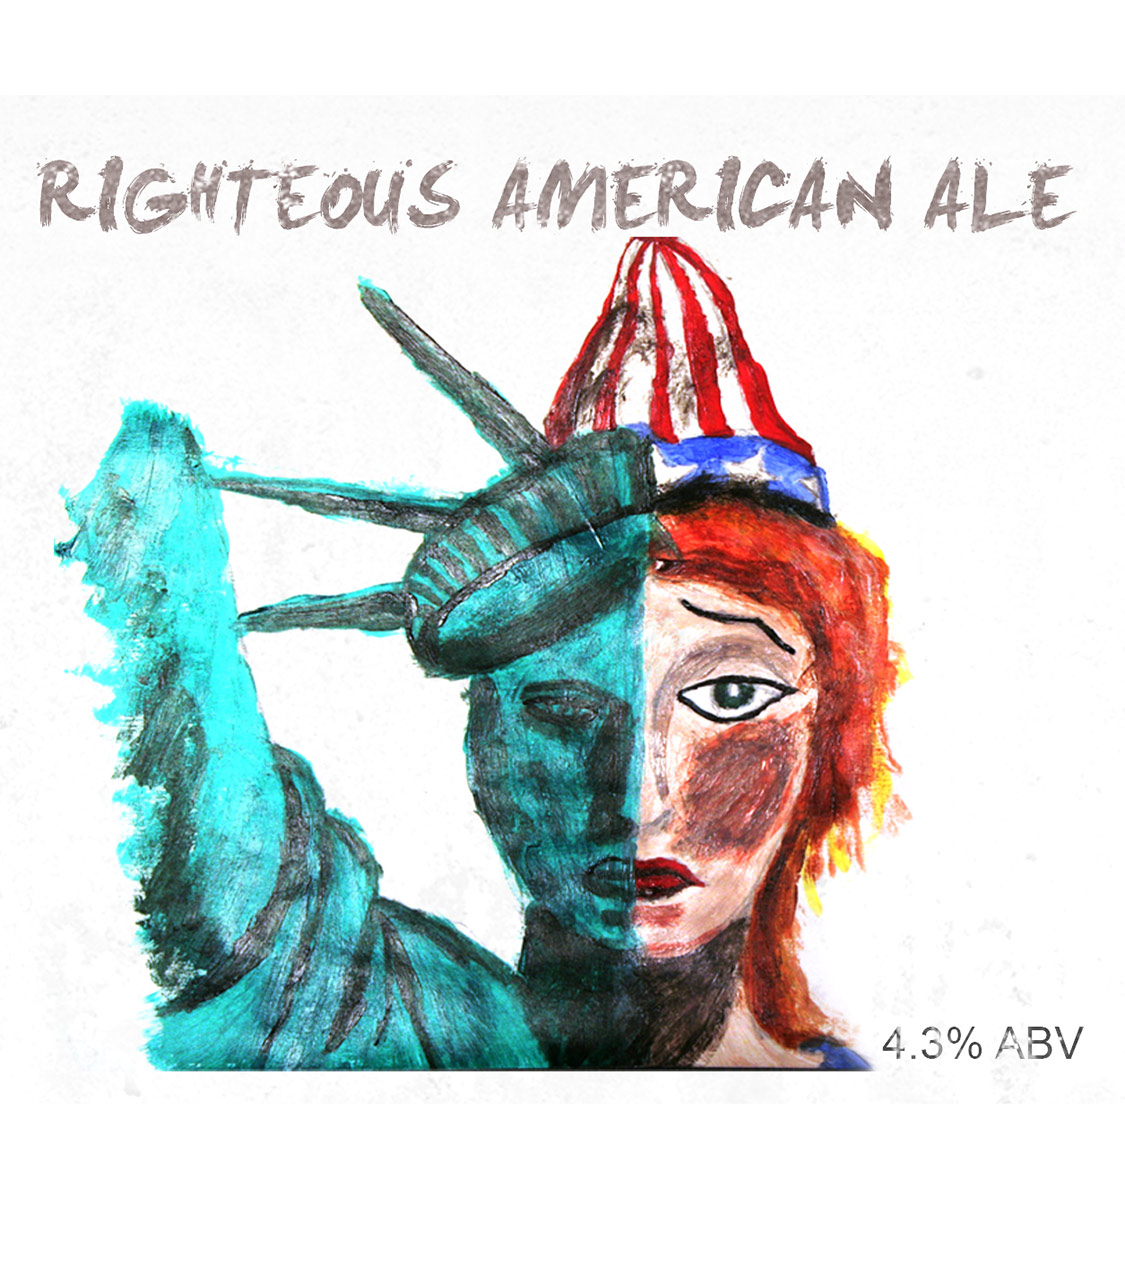 righteousamerican